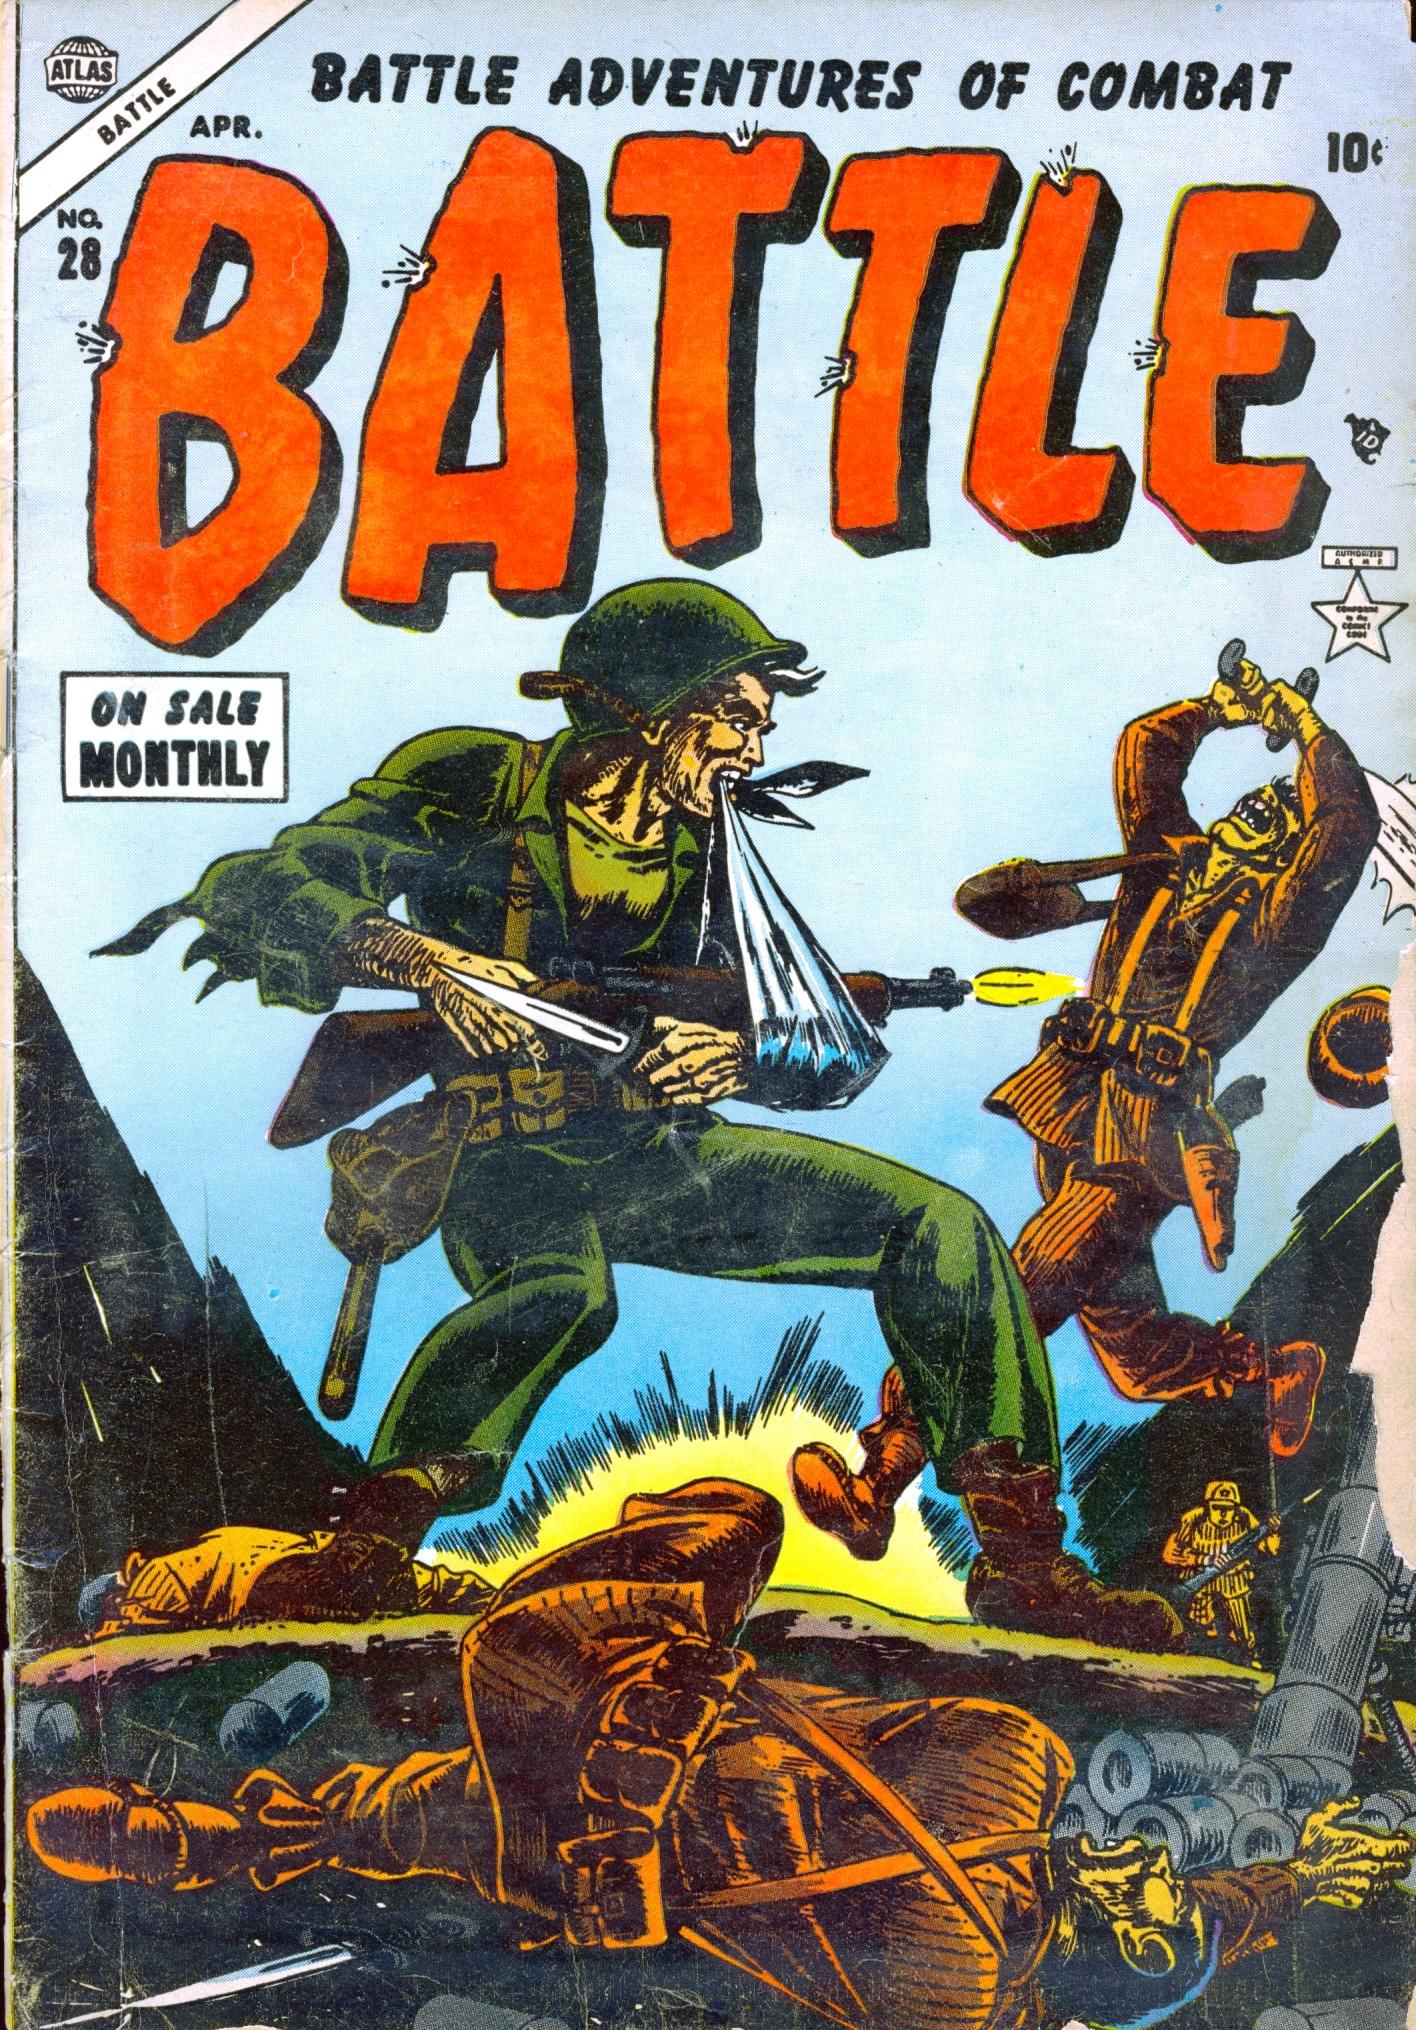 Battle Vol. 1 #28